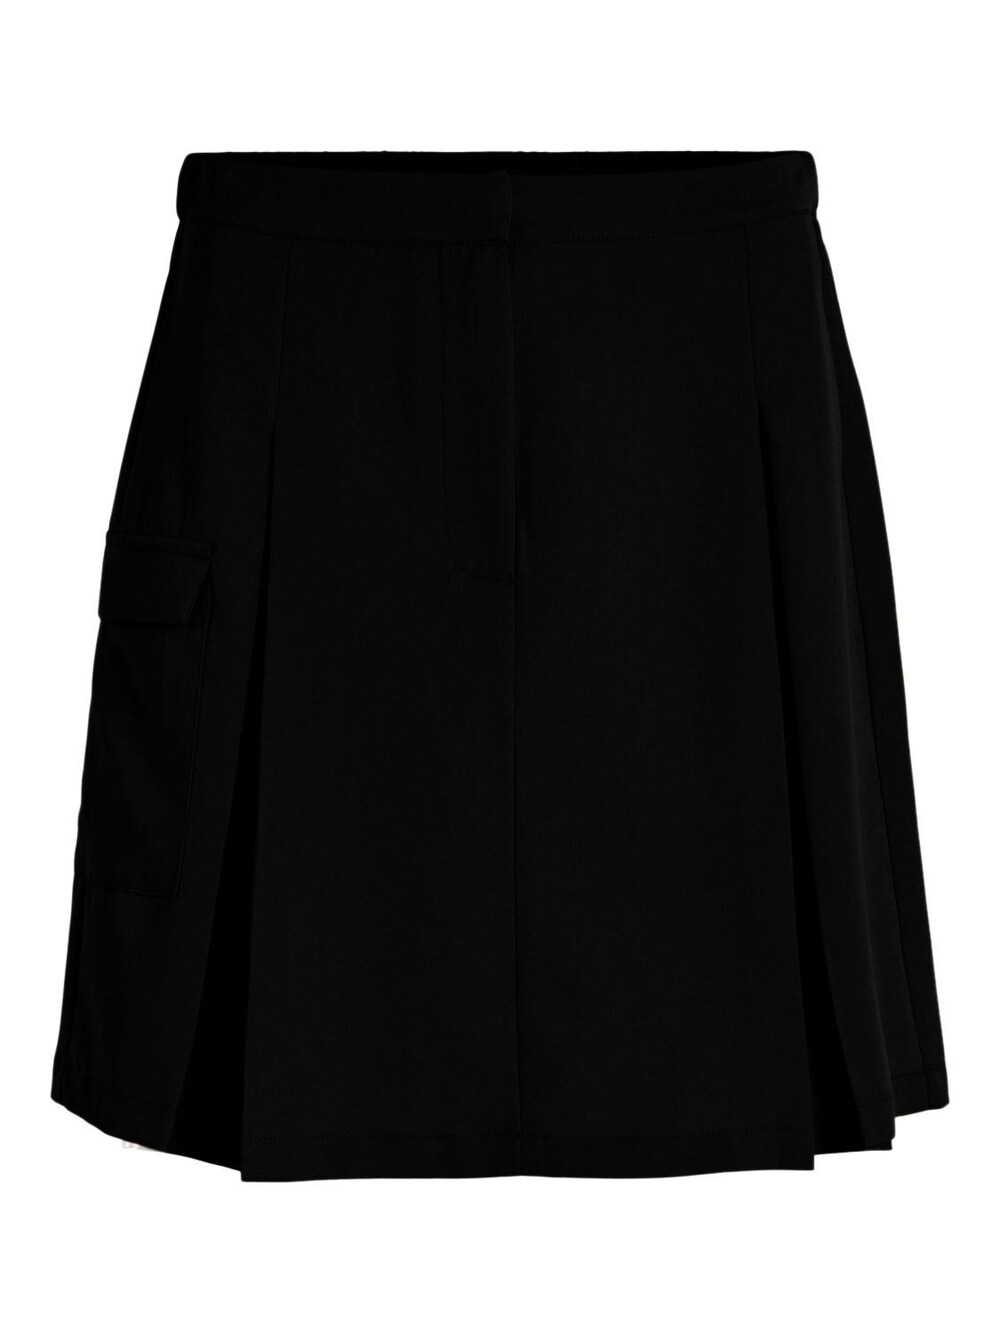 Юбка VILA LEA, черный юбка lea bruni 54y1489